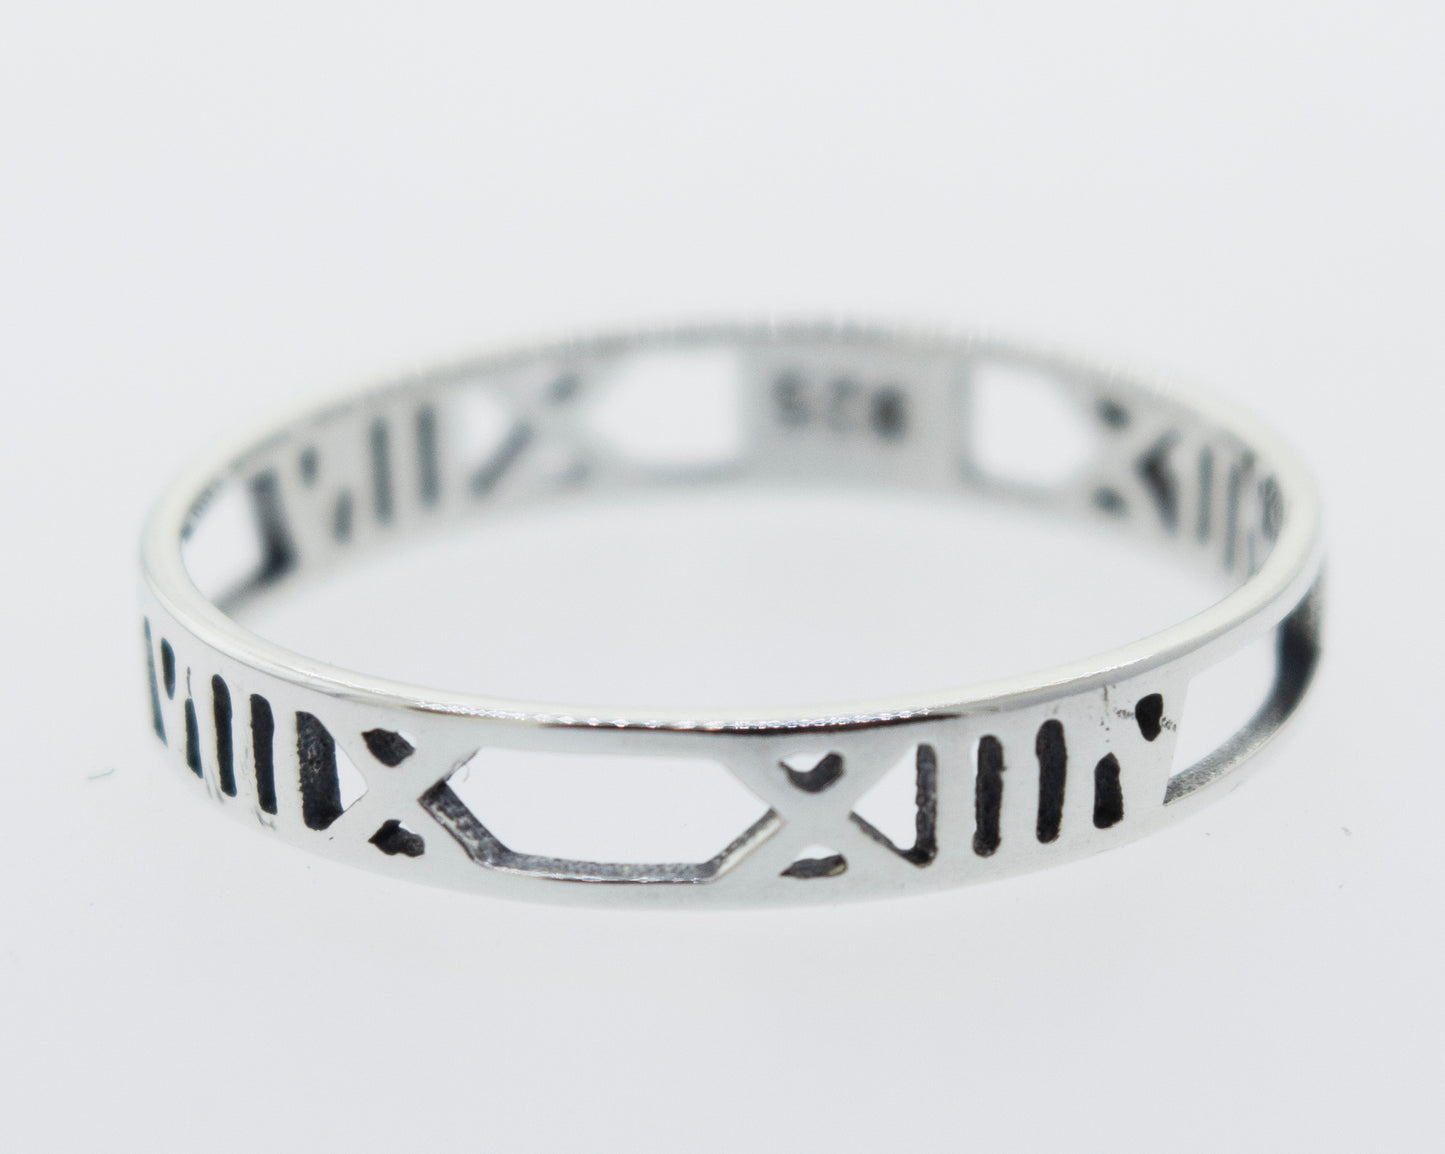 A Super Silver Roman Numerals Ring adorned with elegant Roman numerals.